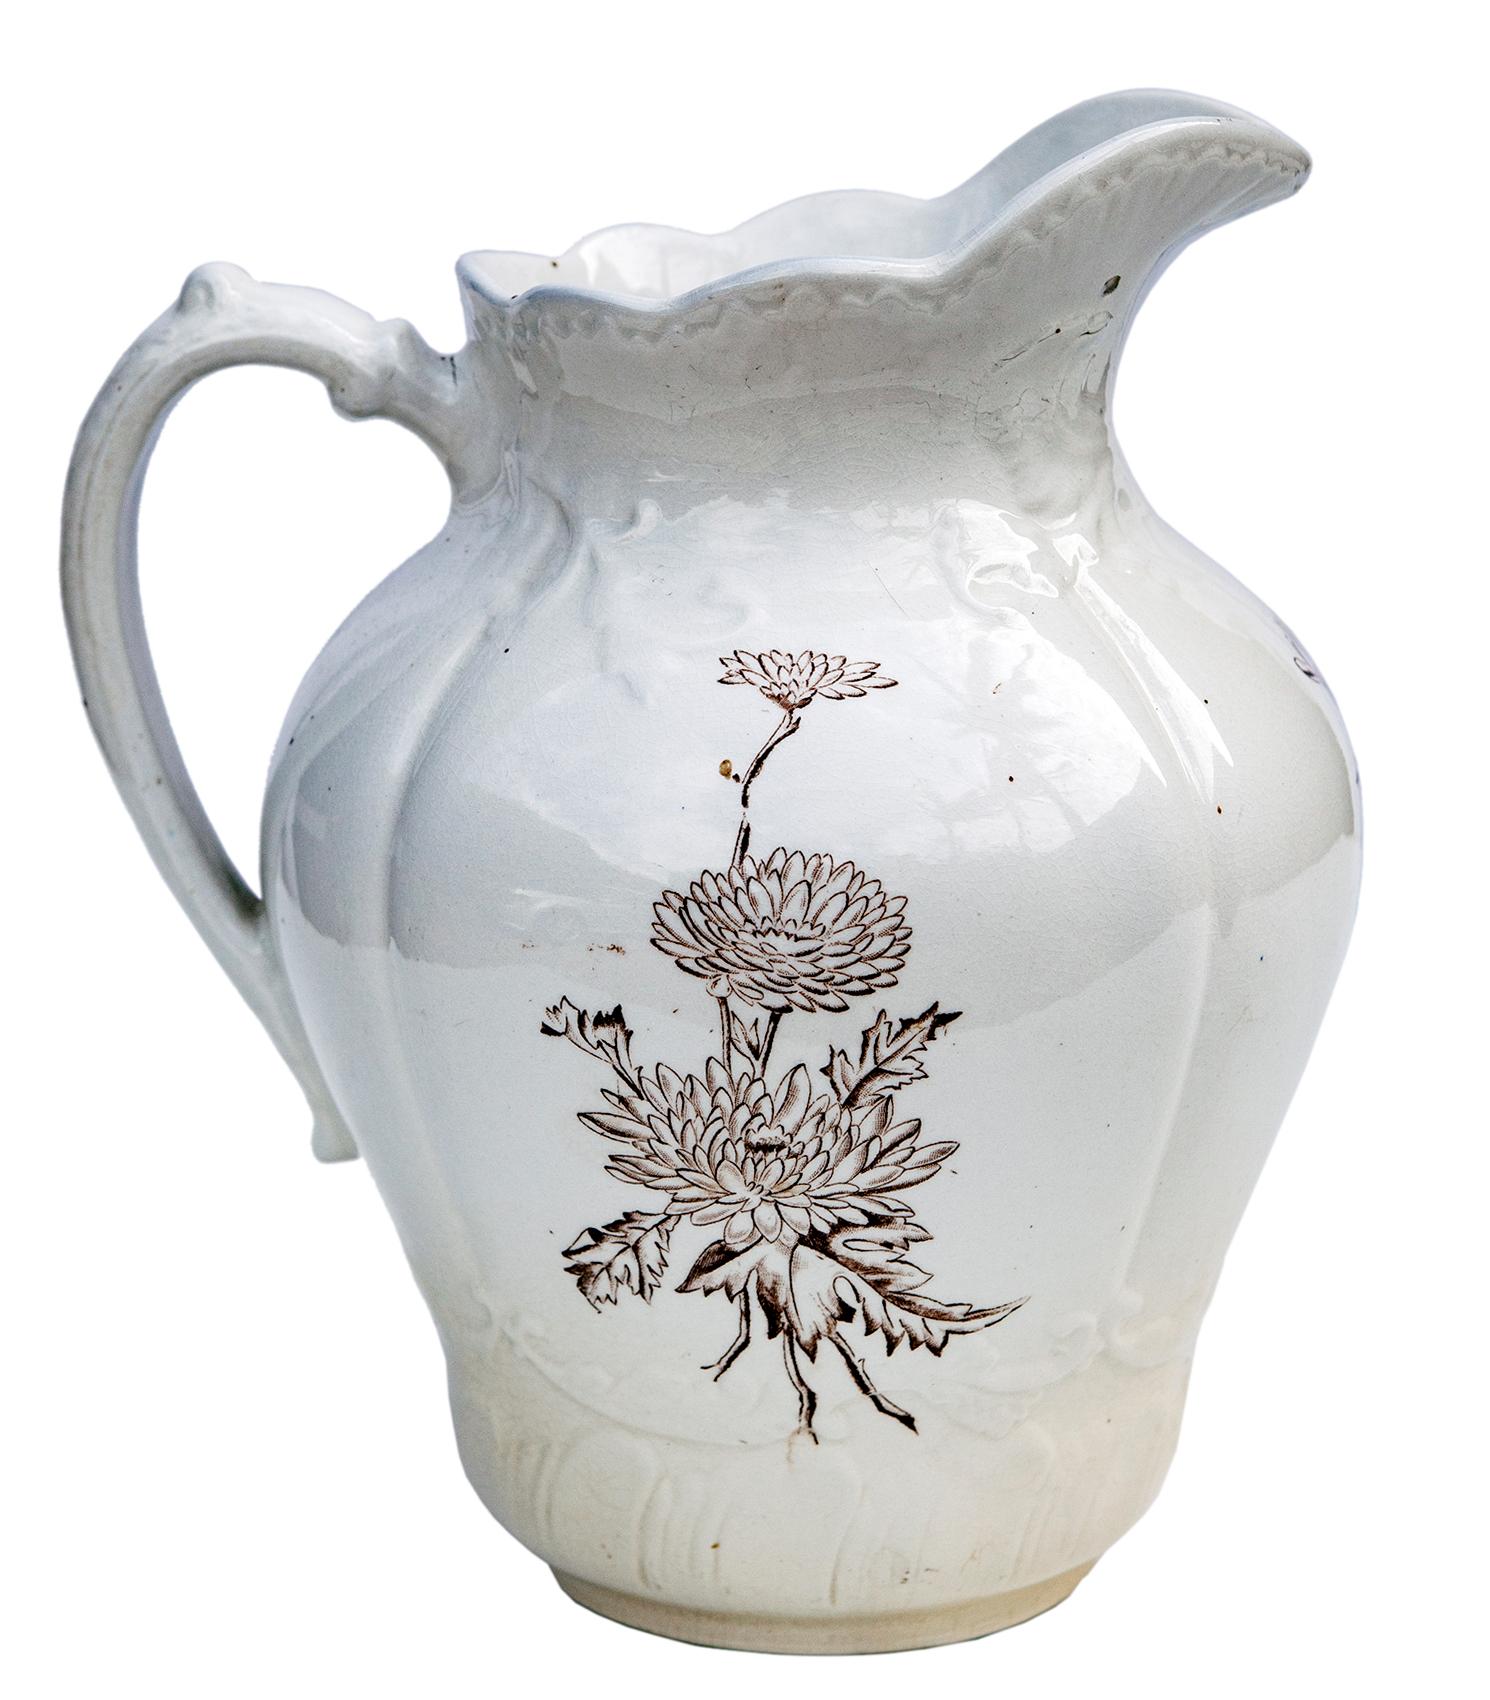 Antique ironstone white transferware pitcher with sepia tone chrysanthemums. 